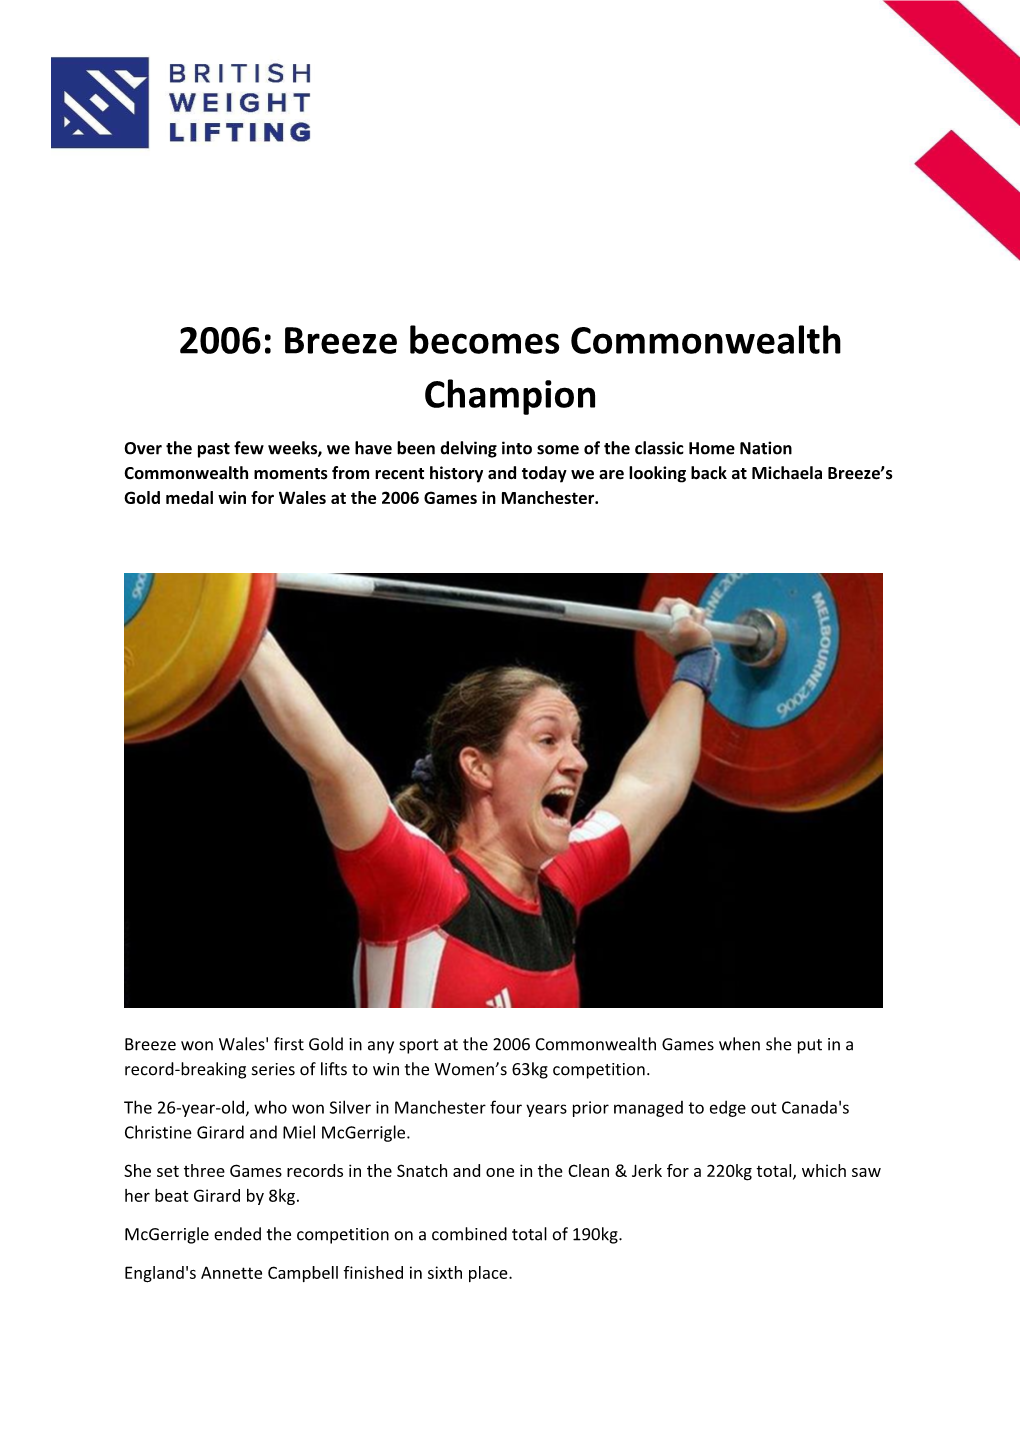 2006: Breeze Becomes Commonwealth Champion